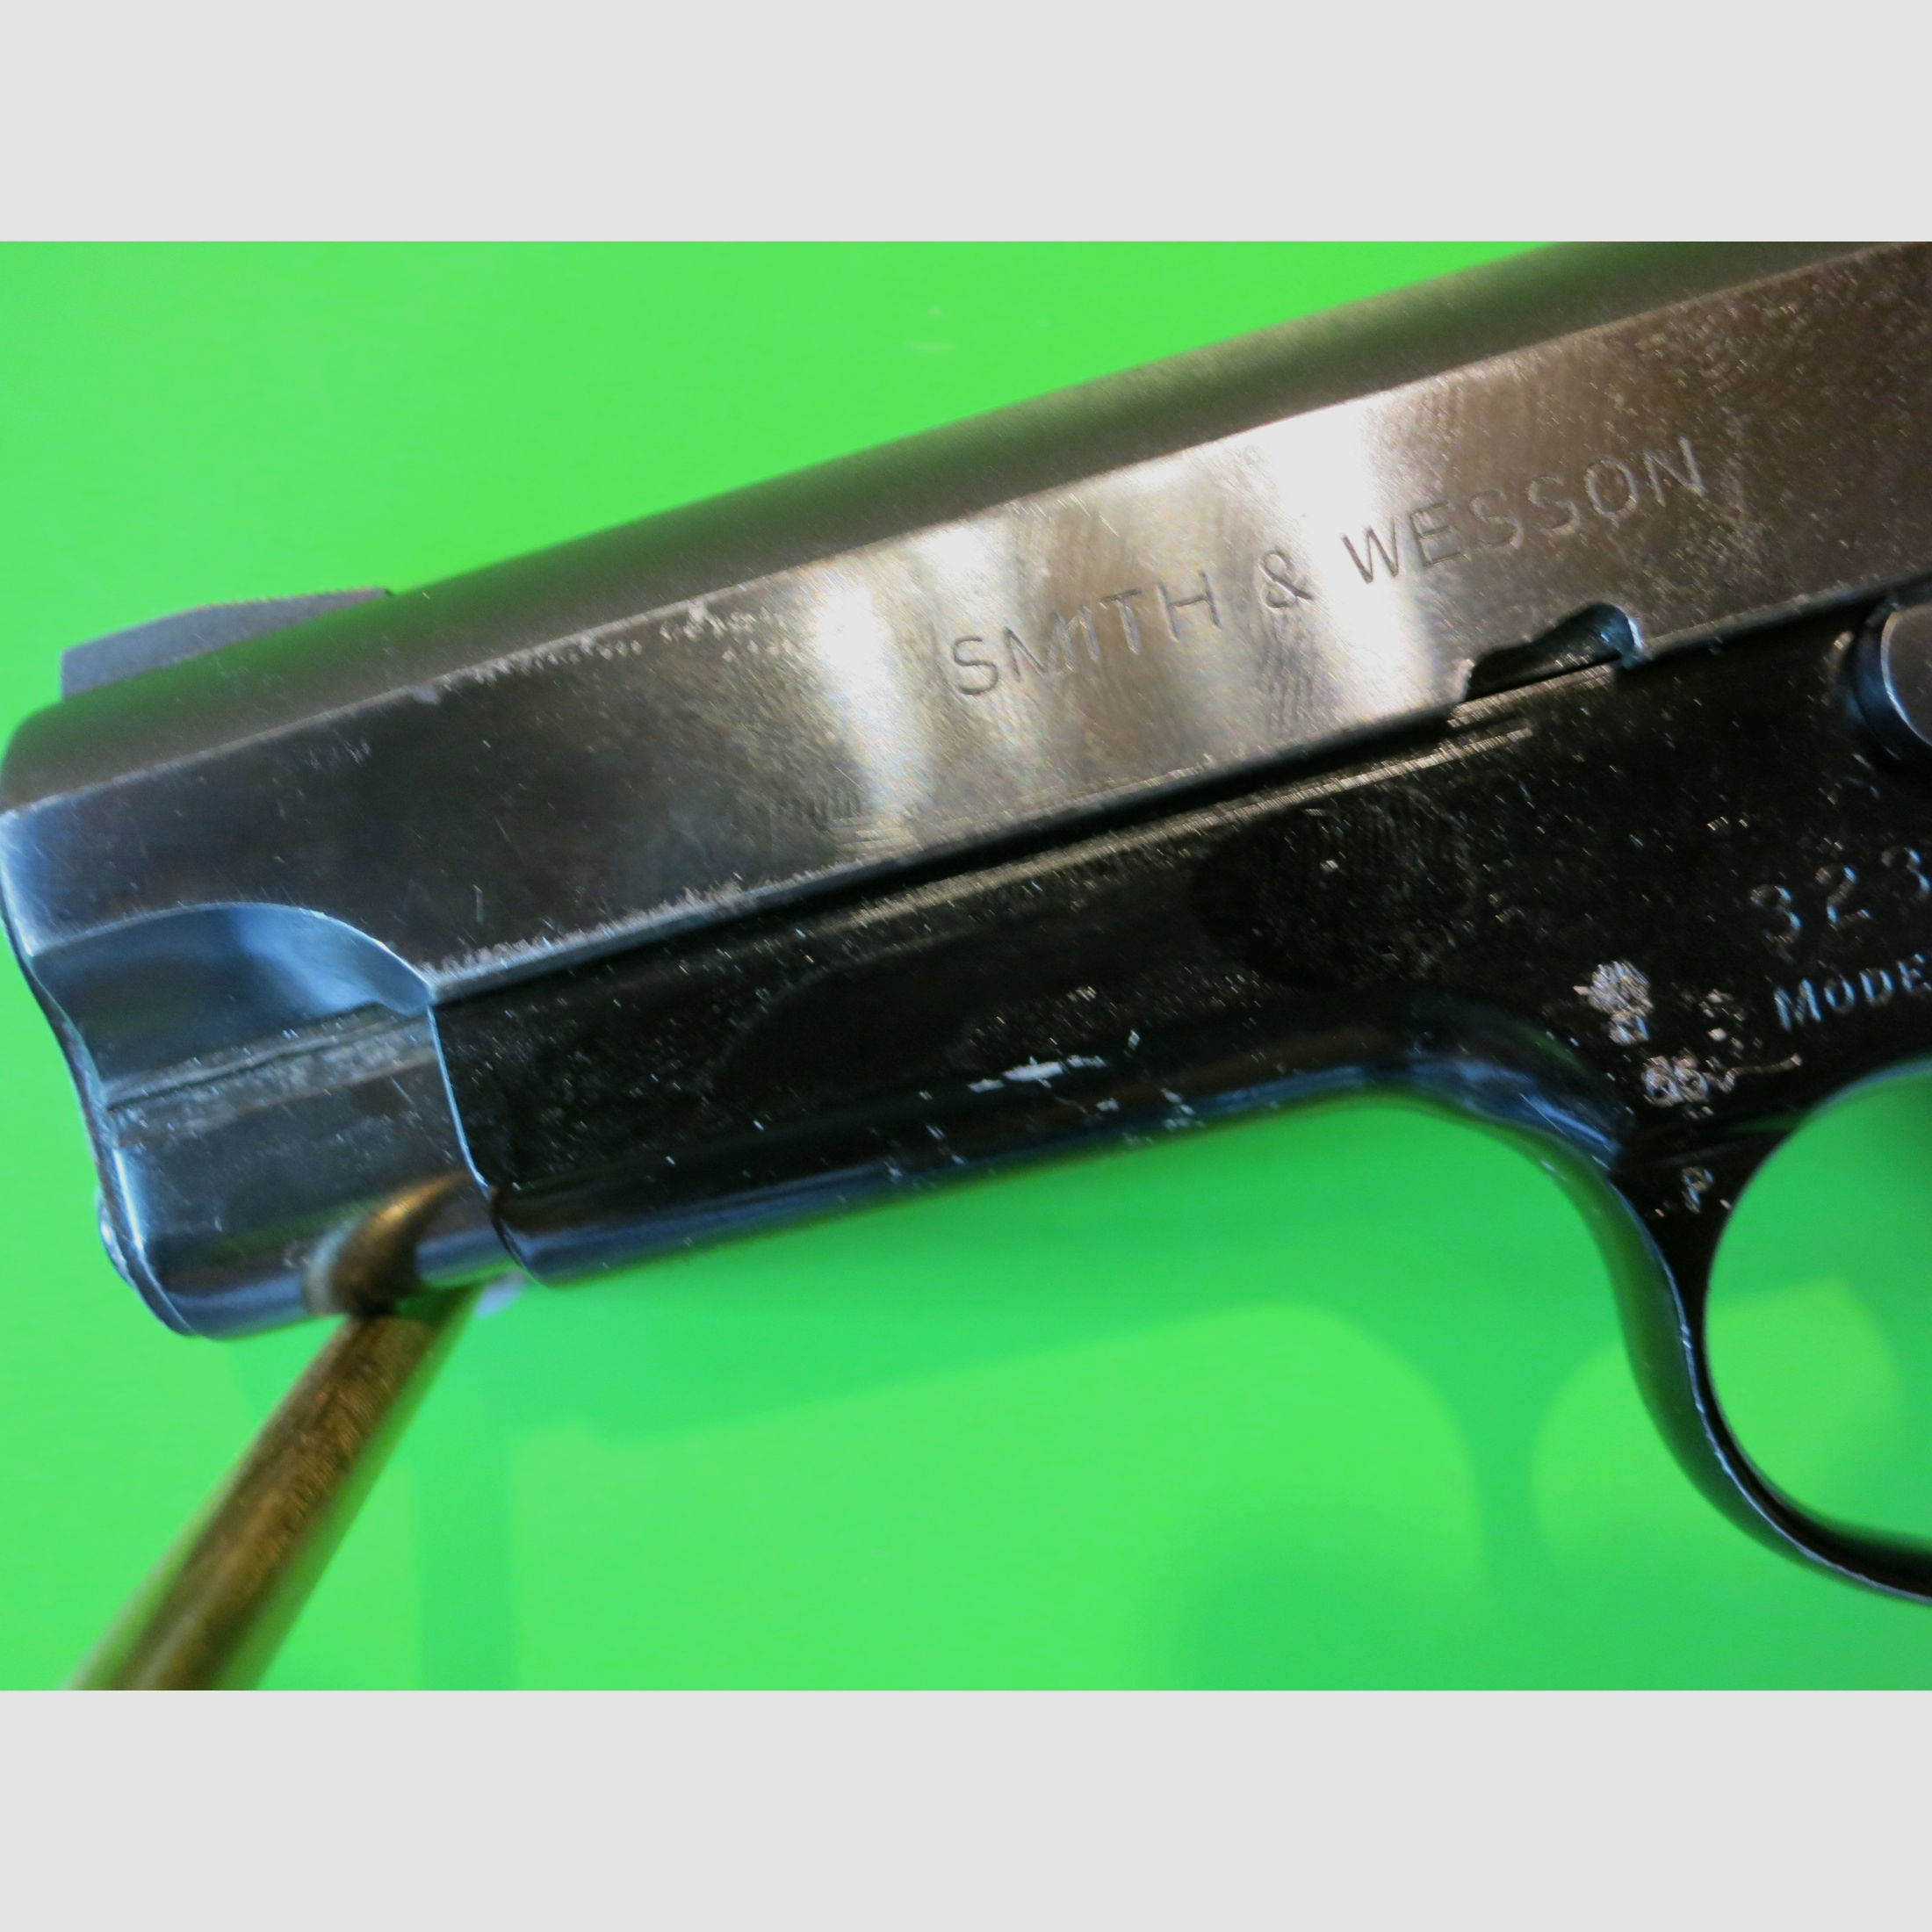 Smith & Wesson Model 39, 9 mm Para -CTG-, 1911er, Sportpistole       #56